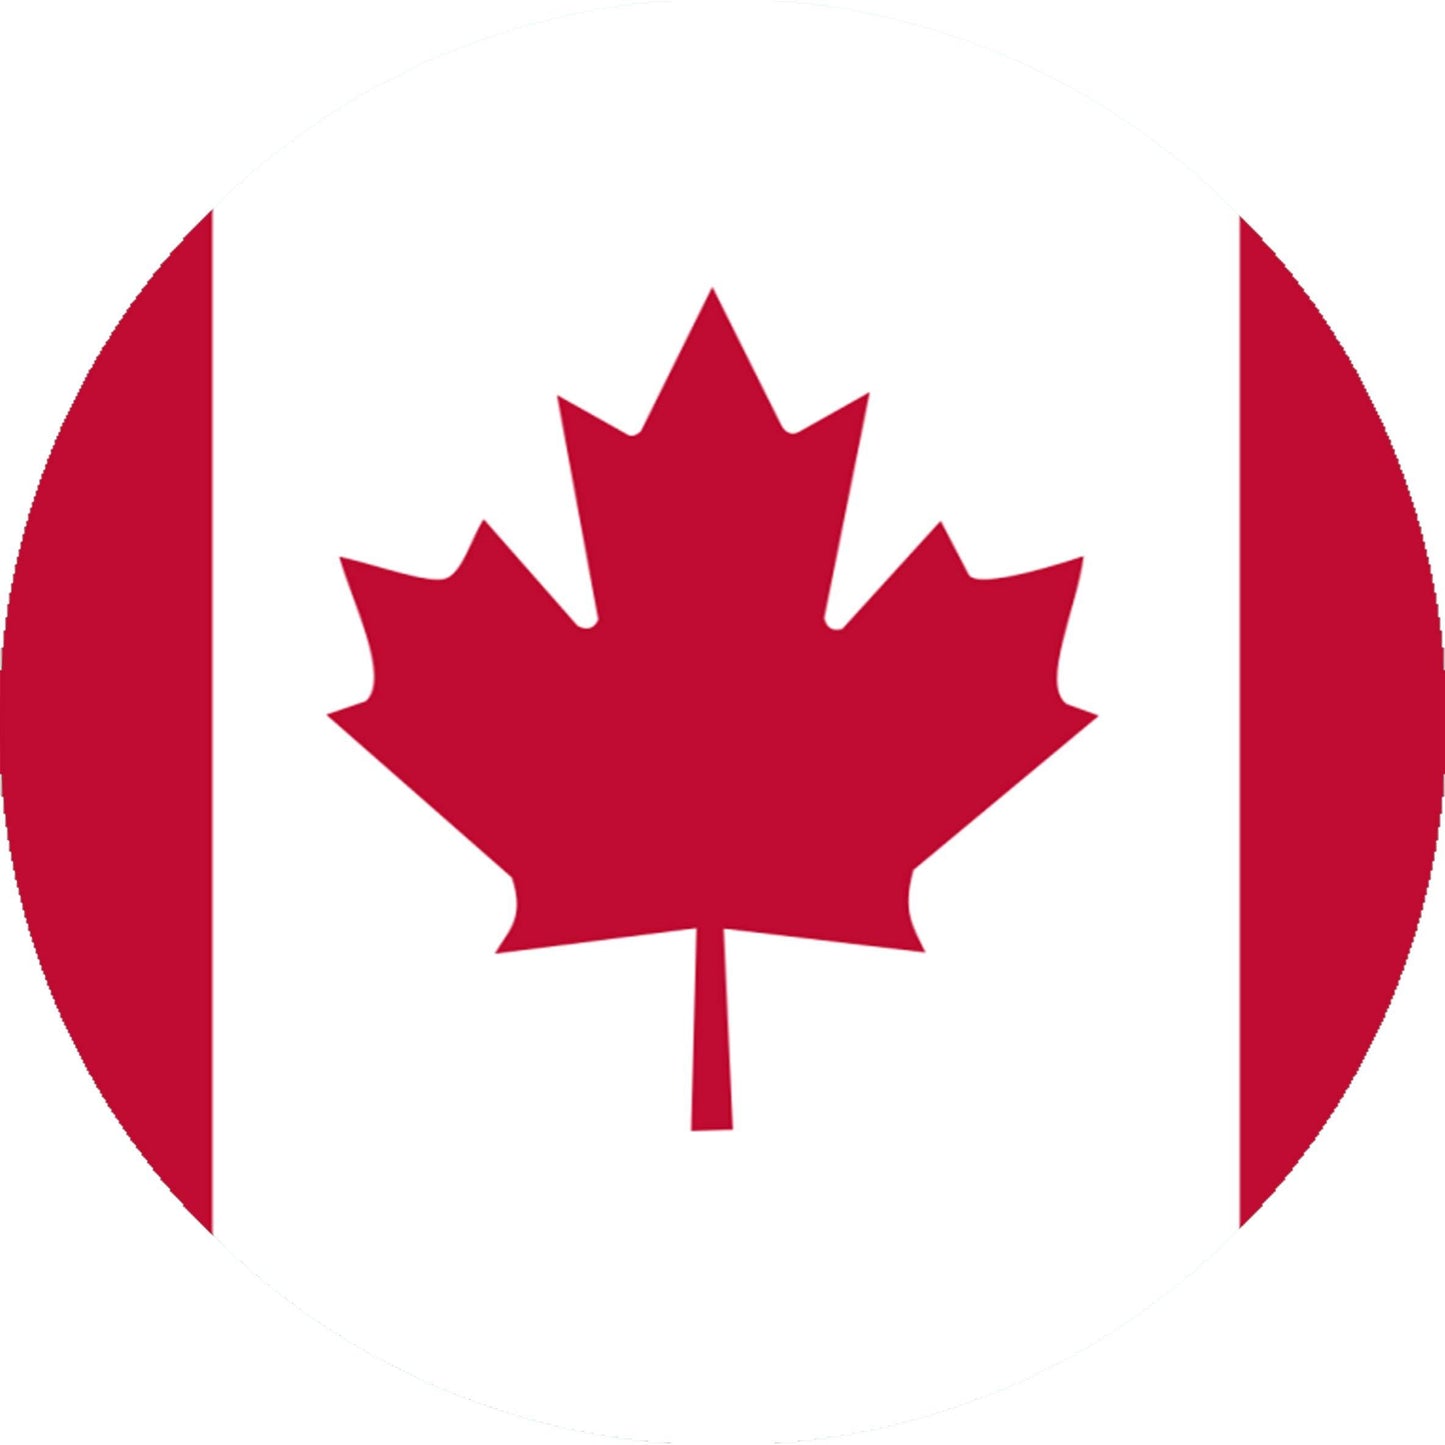 Tortenaufleger Kanada - Tolle-Tortenaufleger